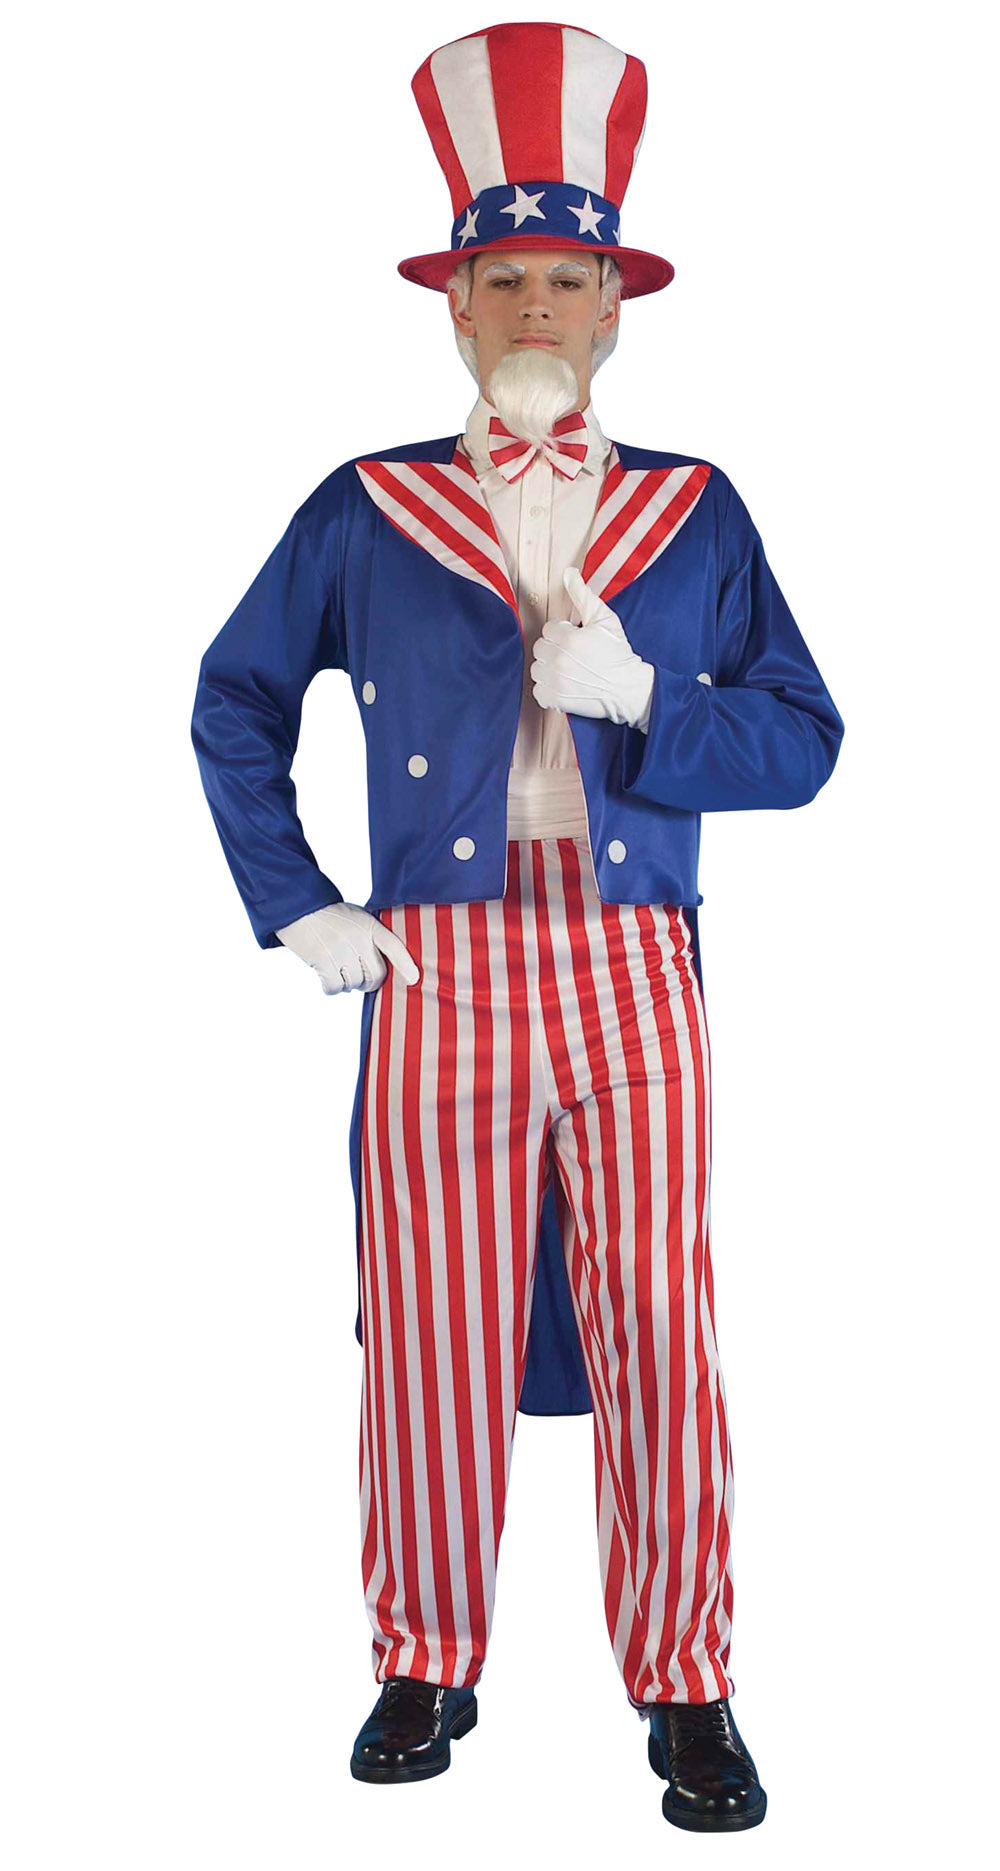 Uncle Sam Costume